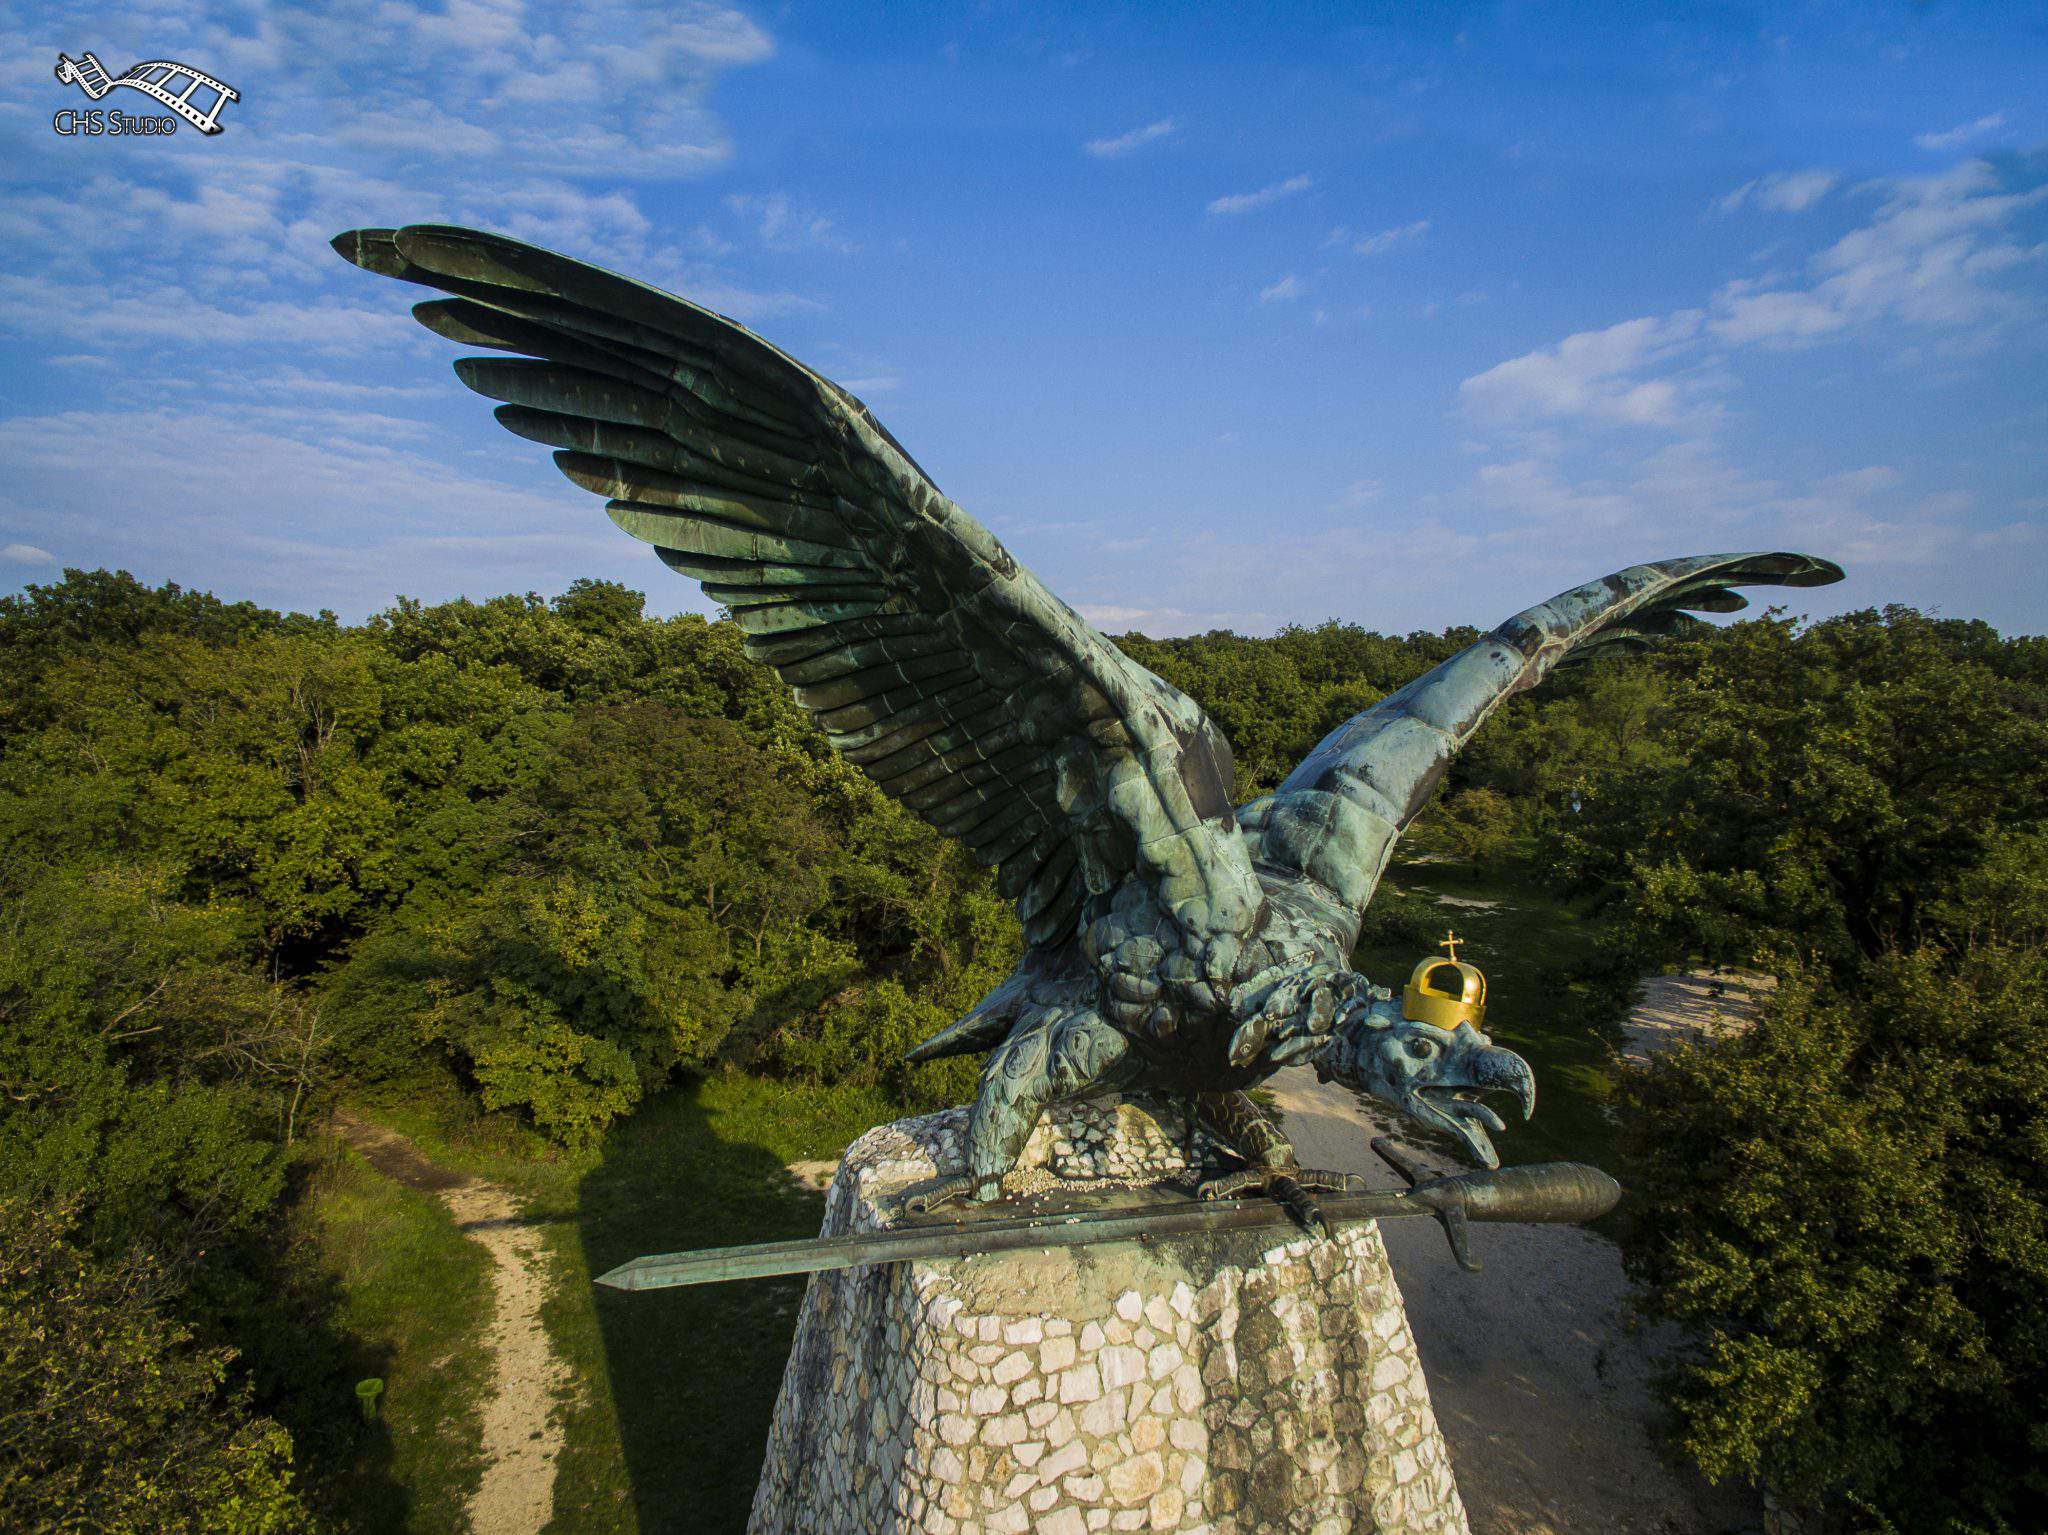 Tatabánya turul птица статуя ястреб орел